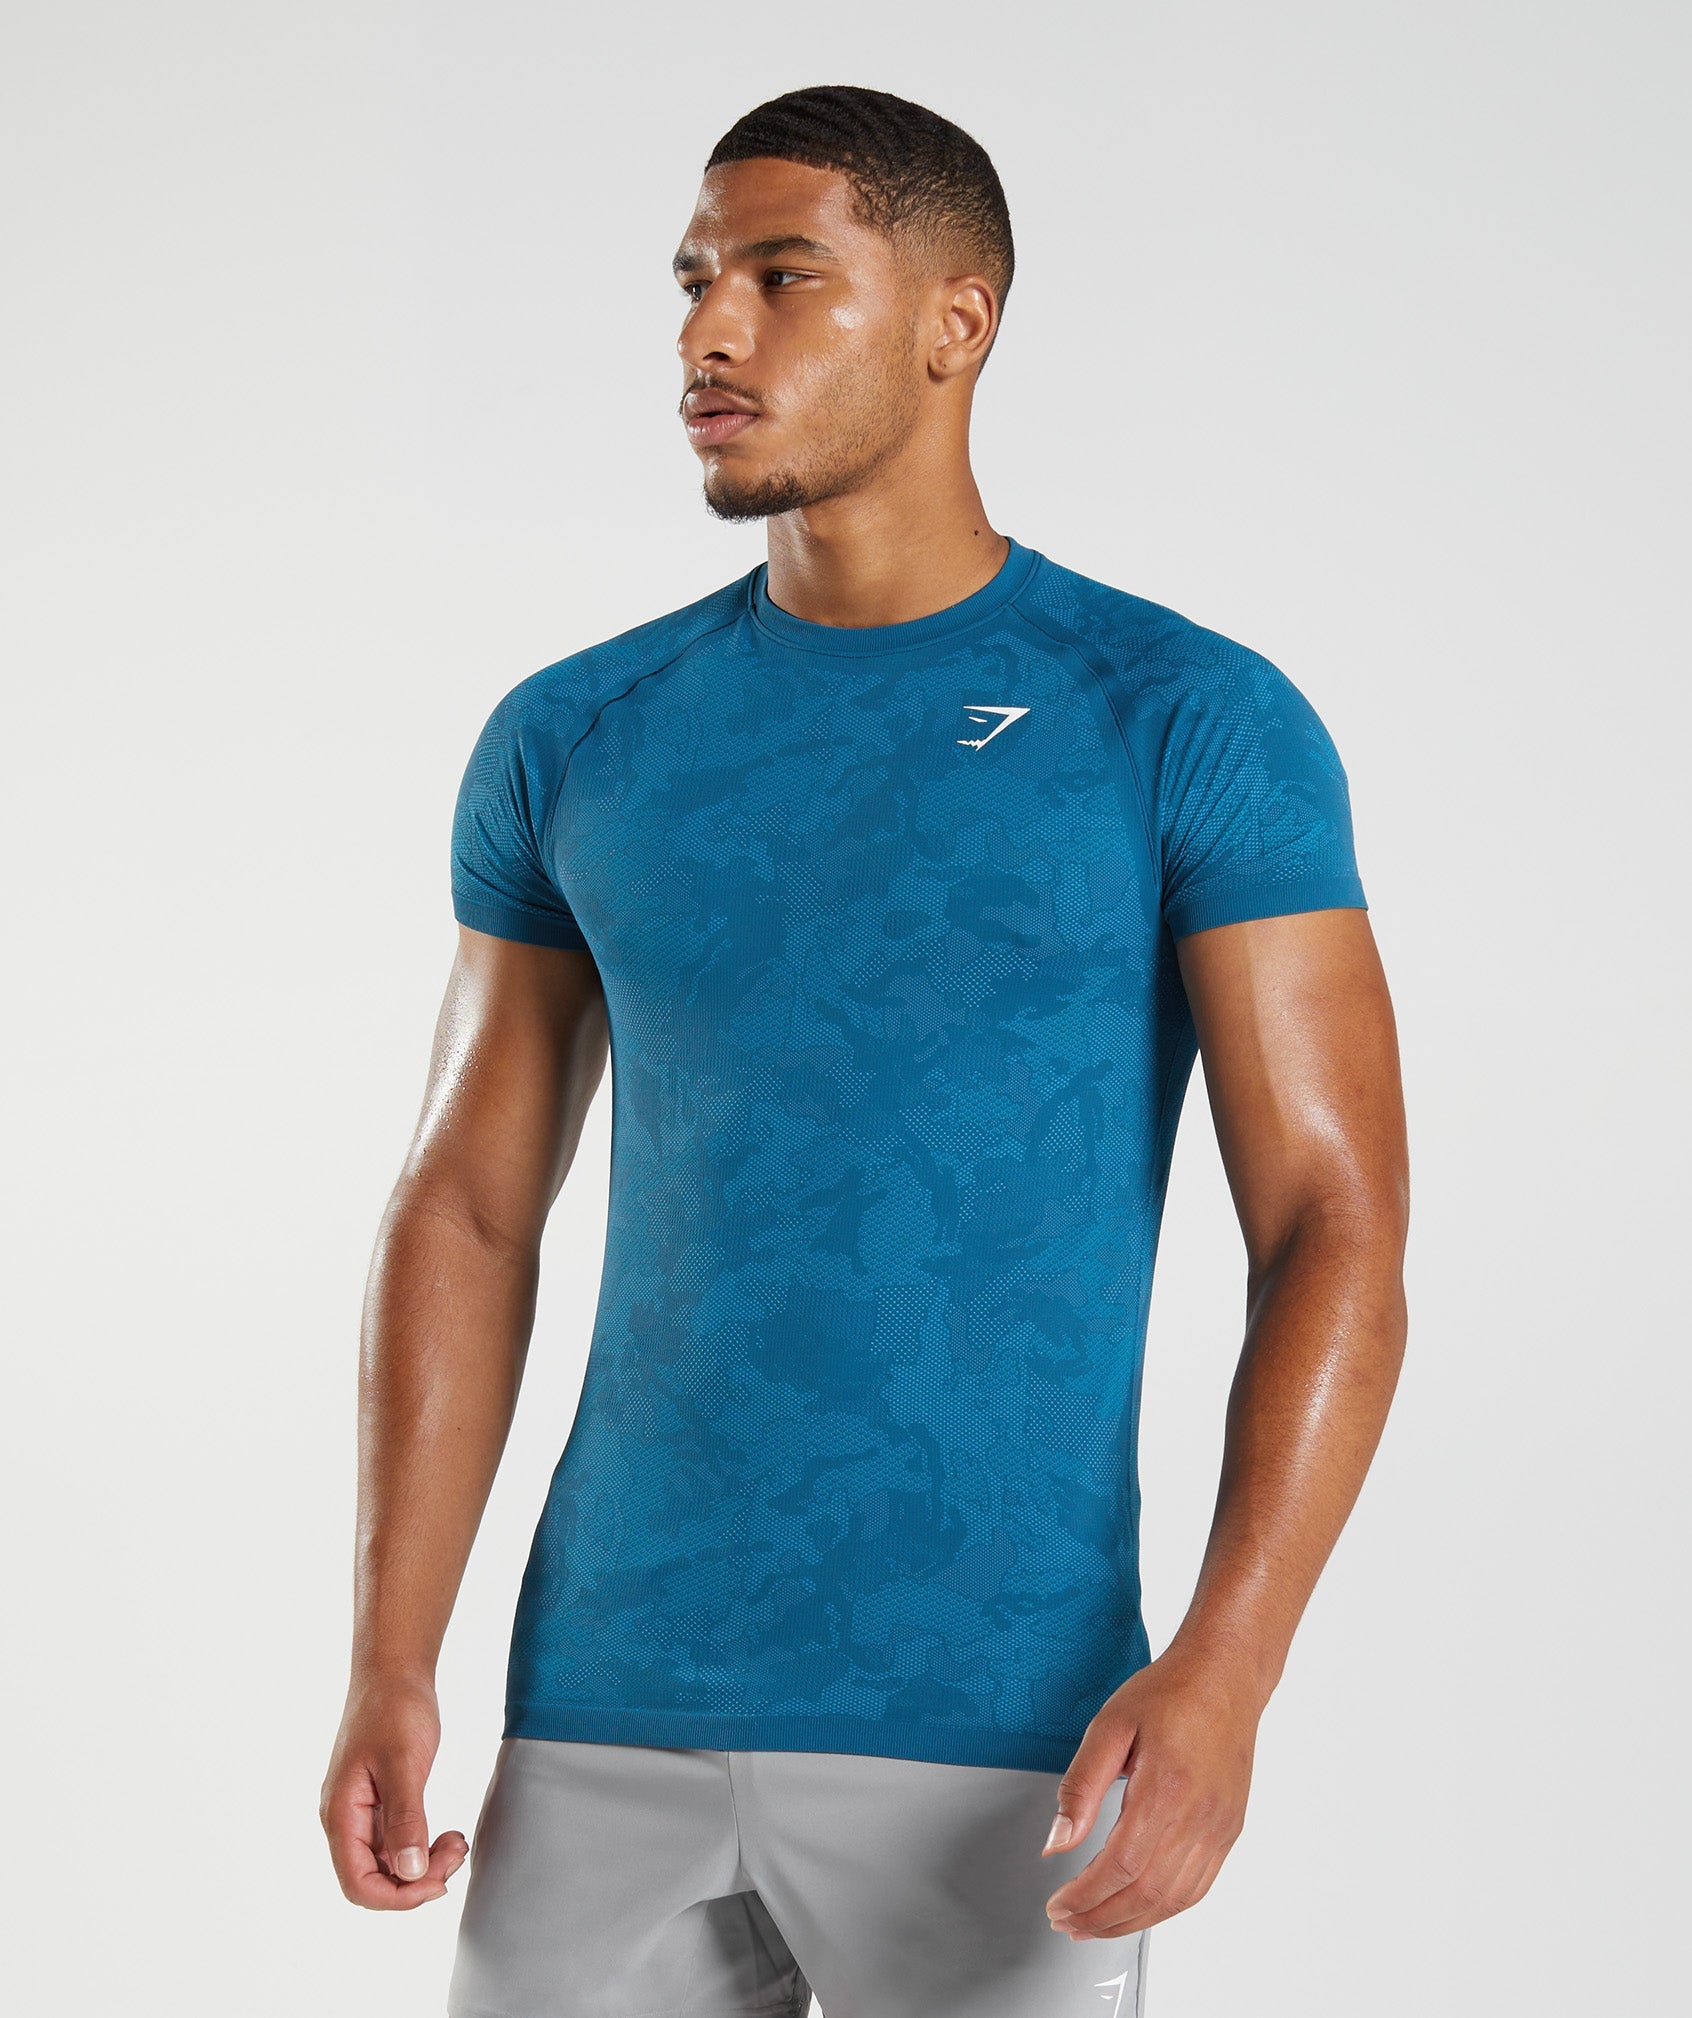 Gymshark Geo Seamless T-Shirt - Vintage Blue/Navy